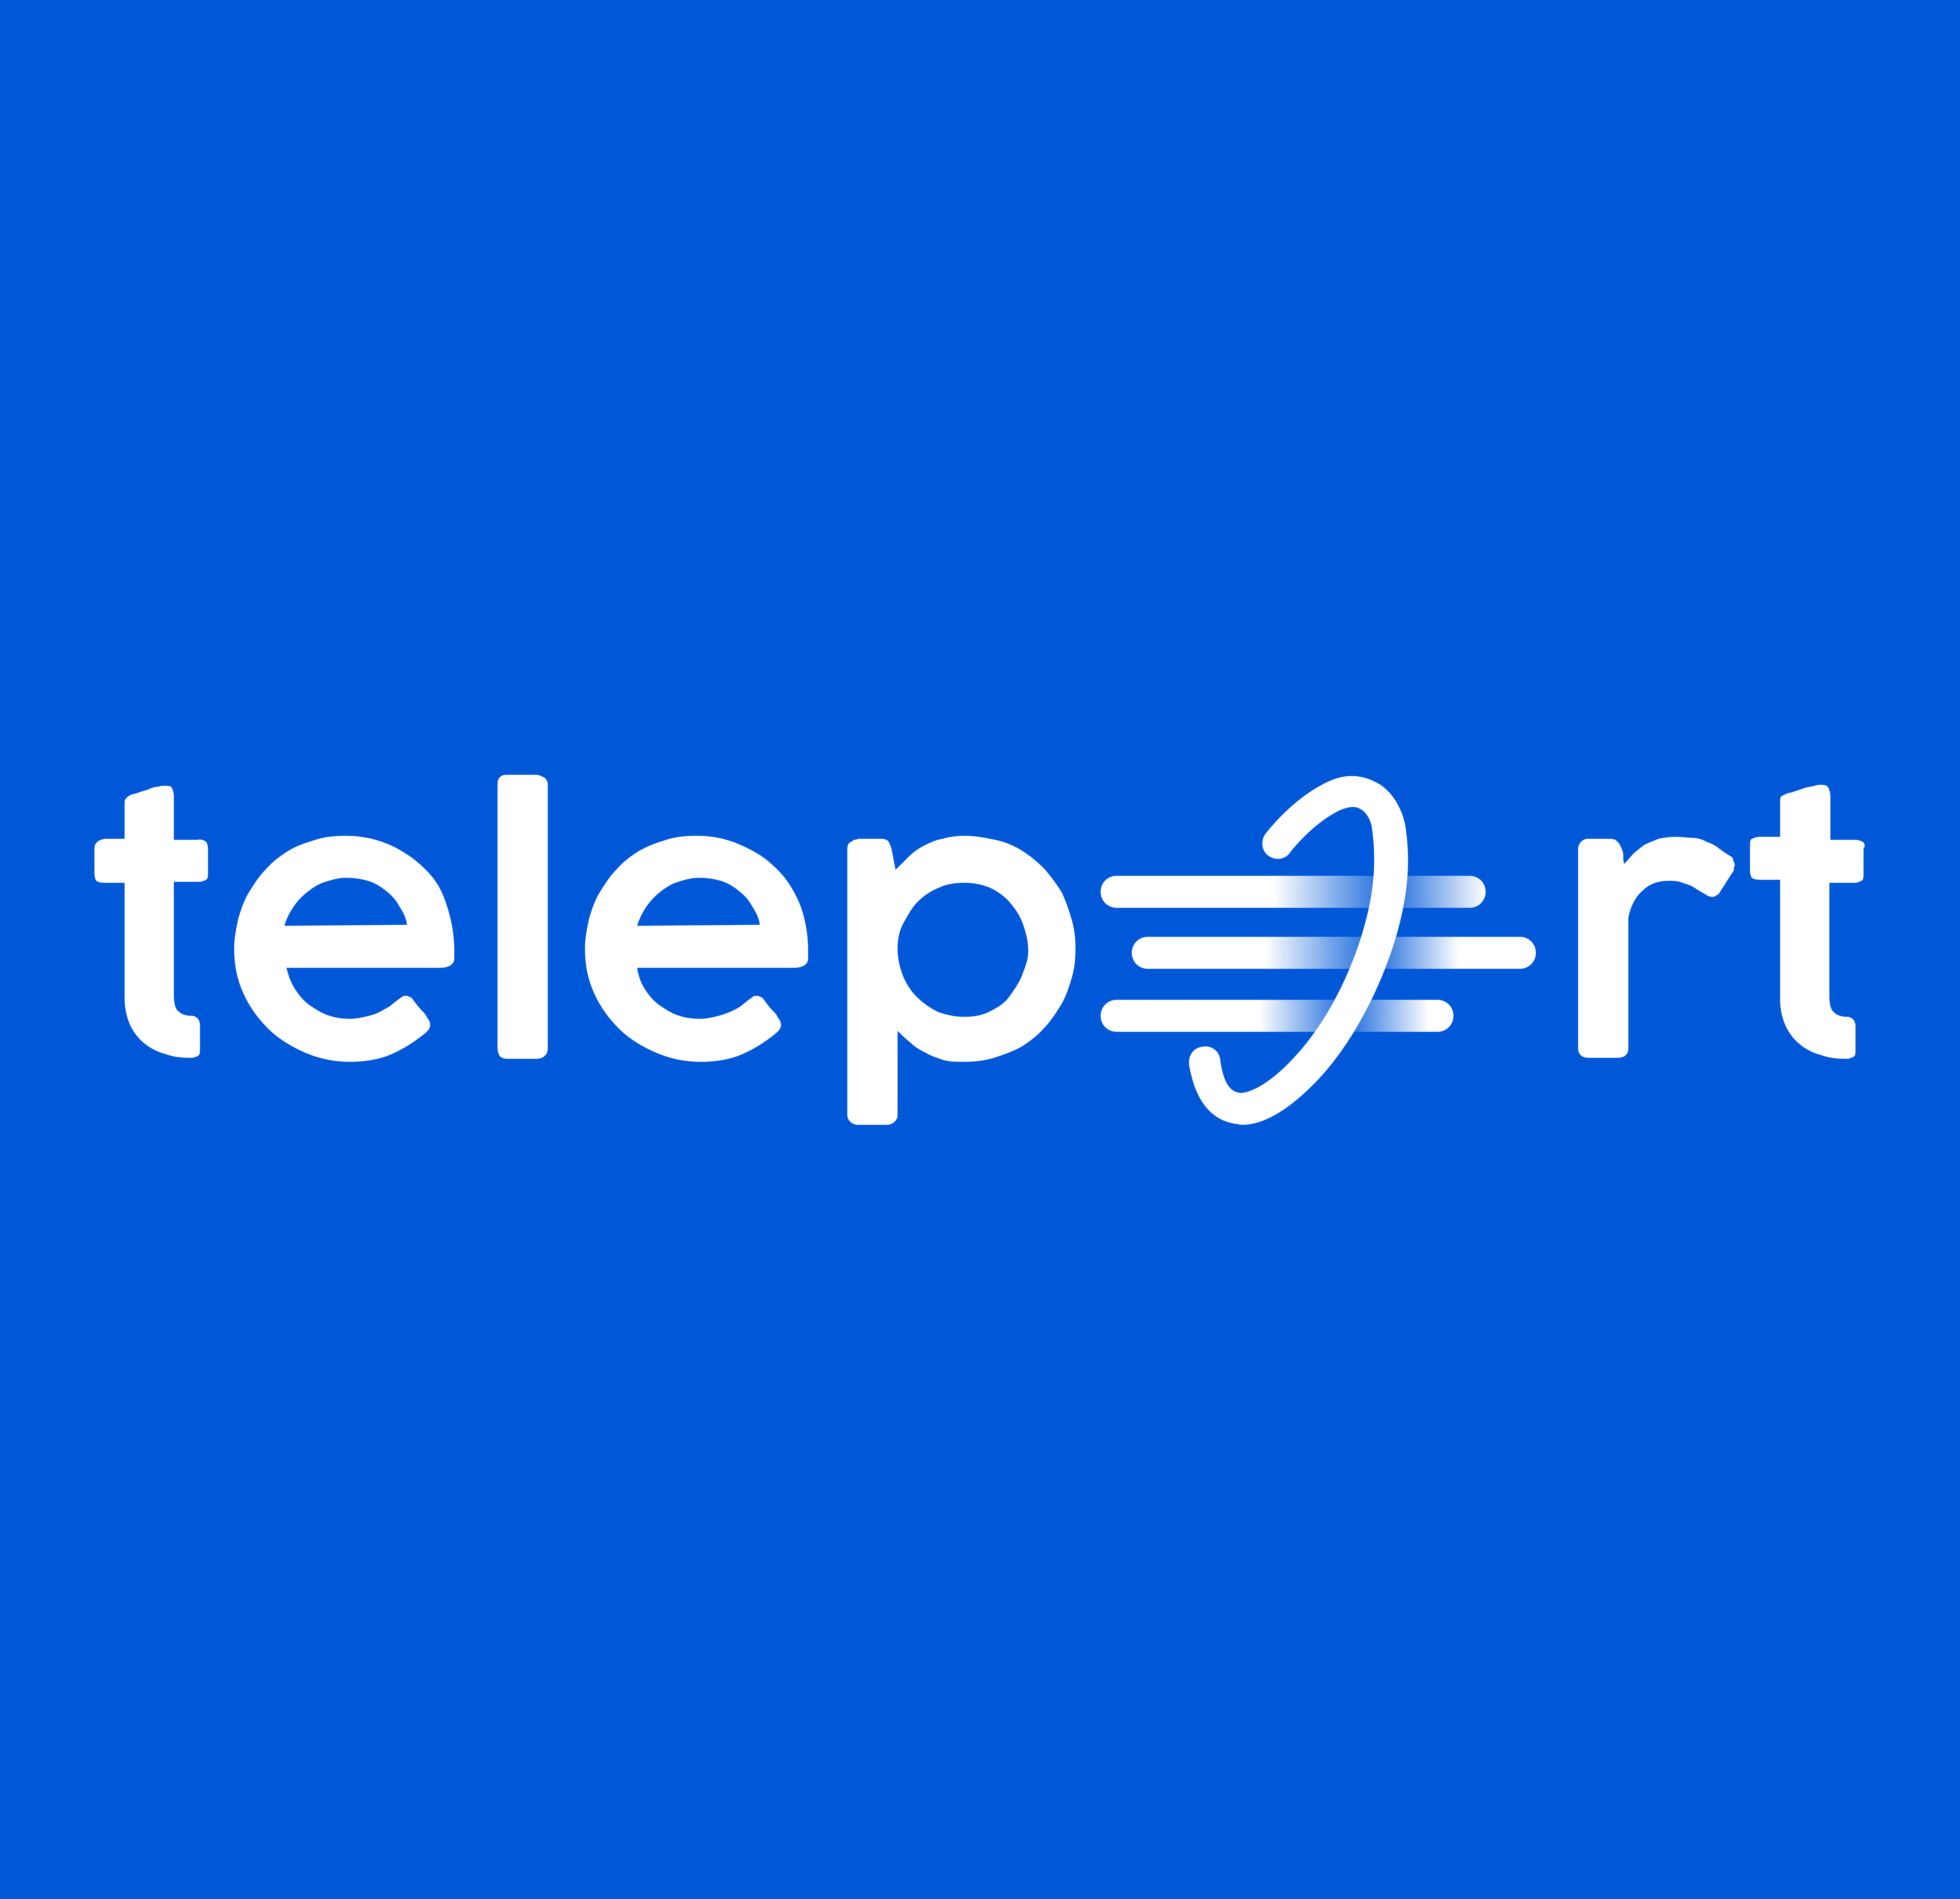 TravelTech Startup Teleport Raises USD 500K in Pre-Seed Round